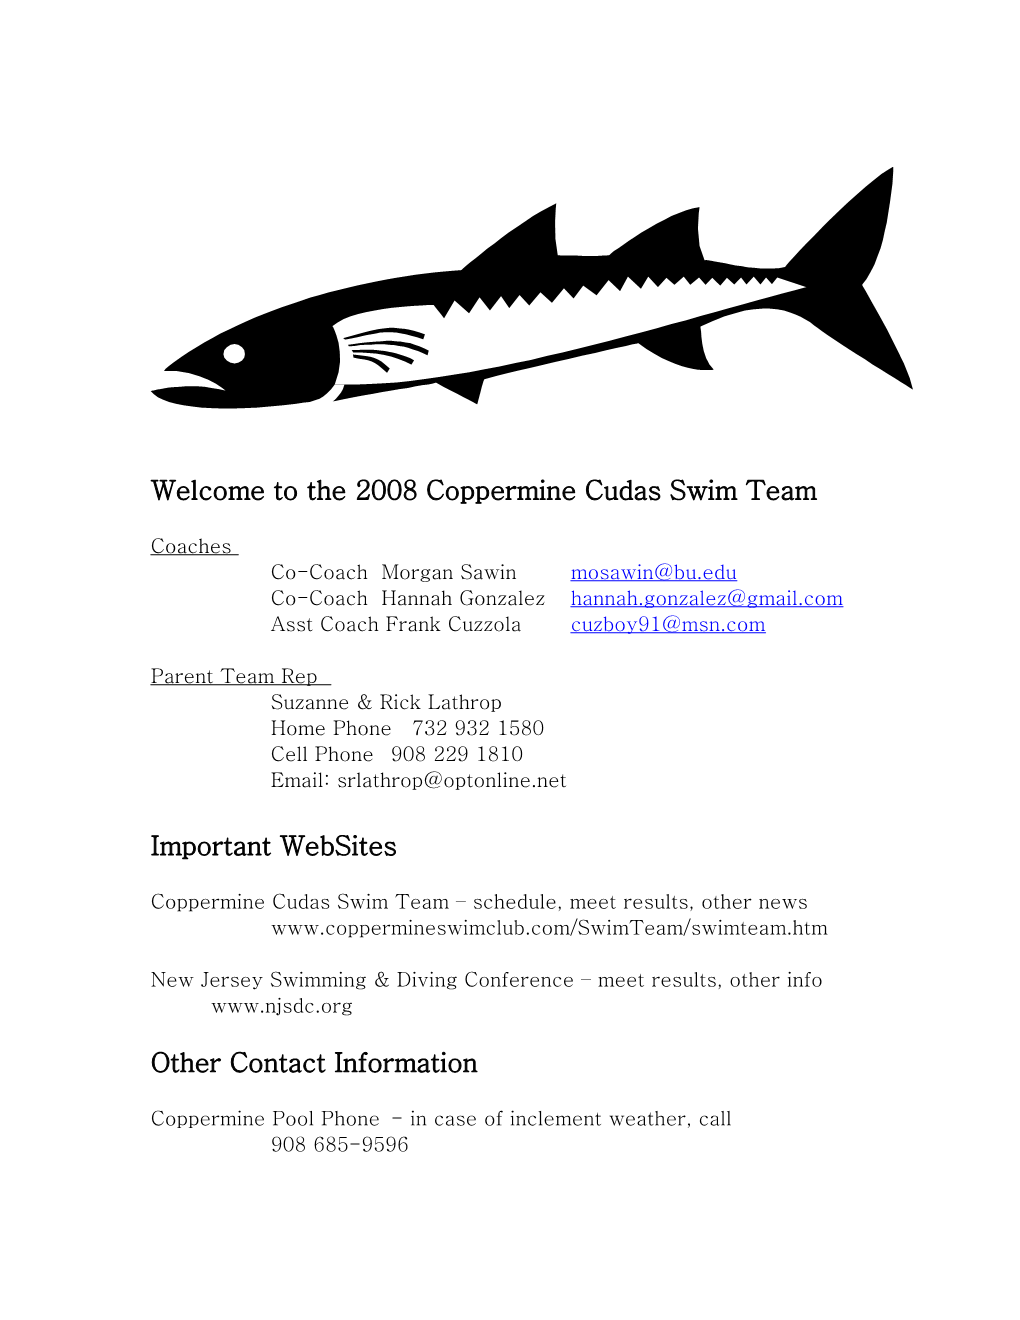 Welcome to the 2008 Coppermine Cudas Swim Team